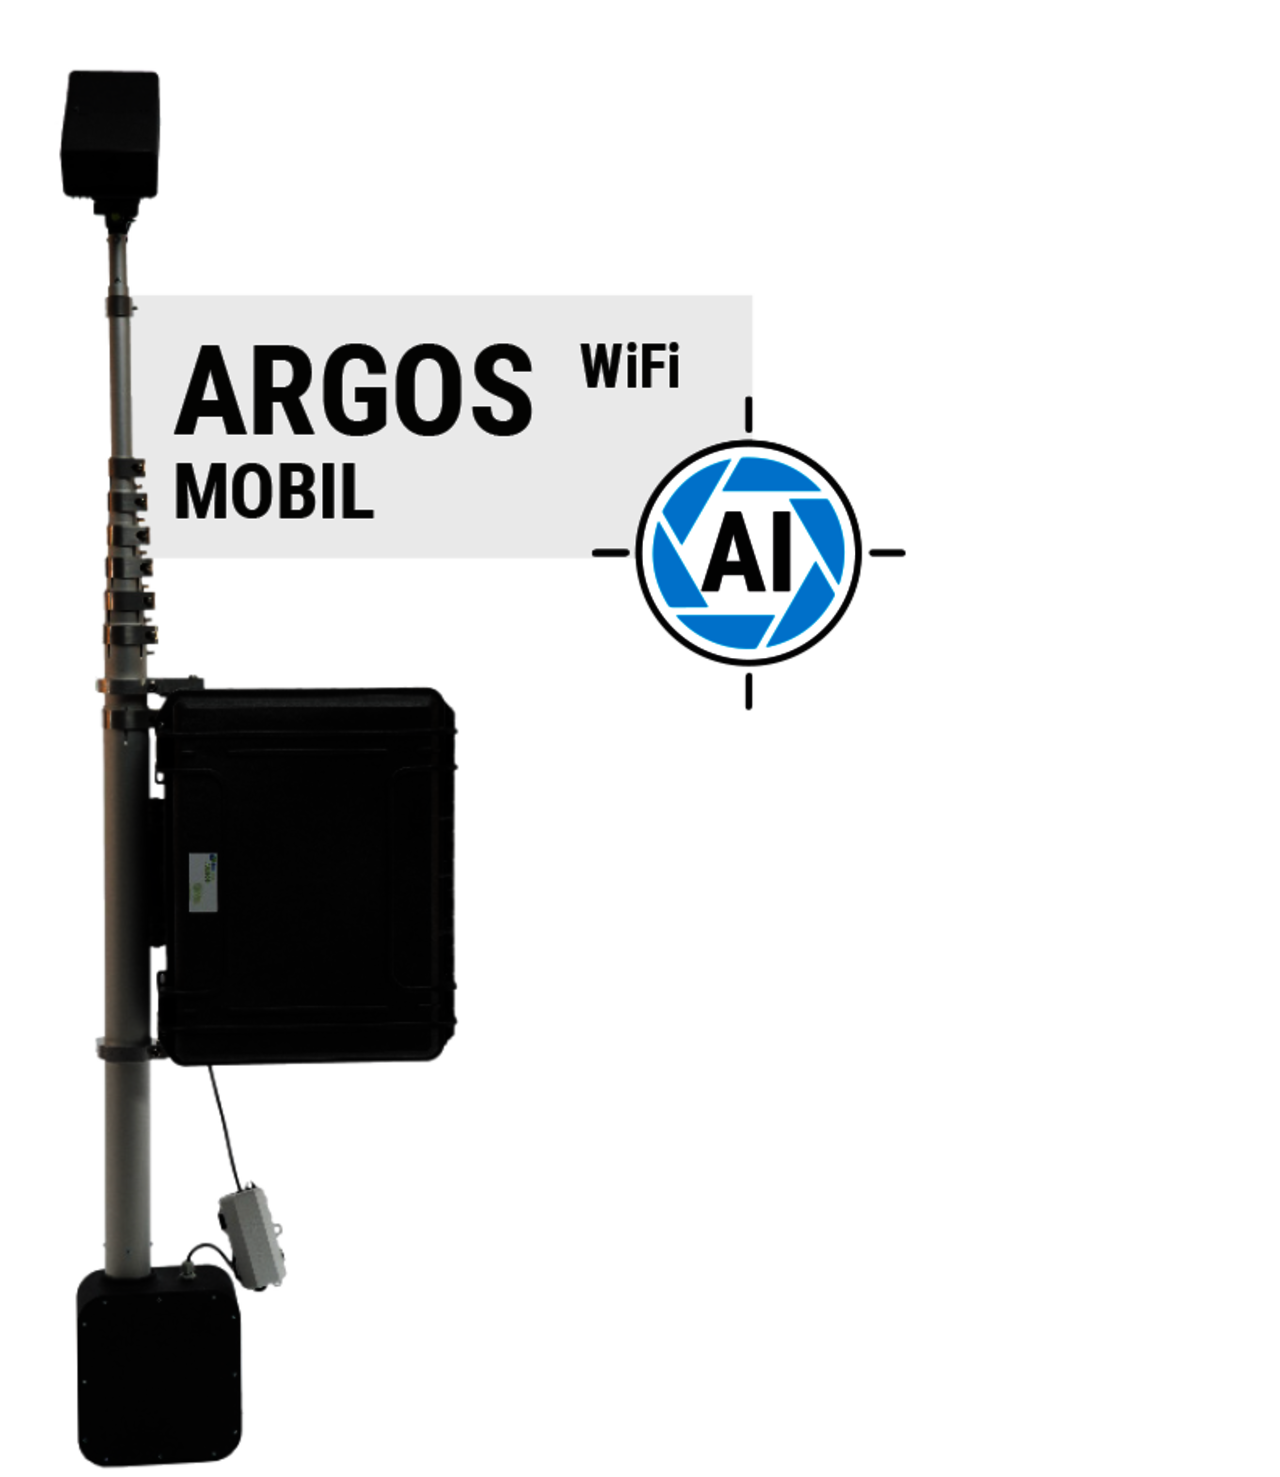 ARGOS mobile WiFi - artificial intelligence